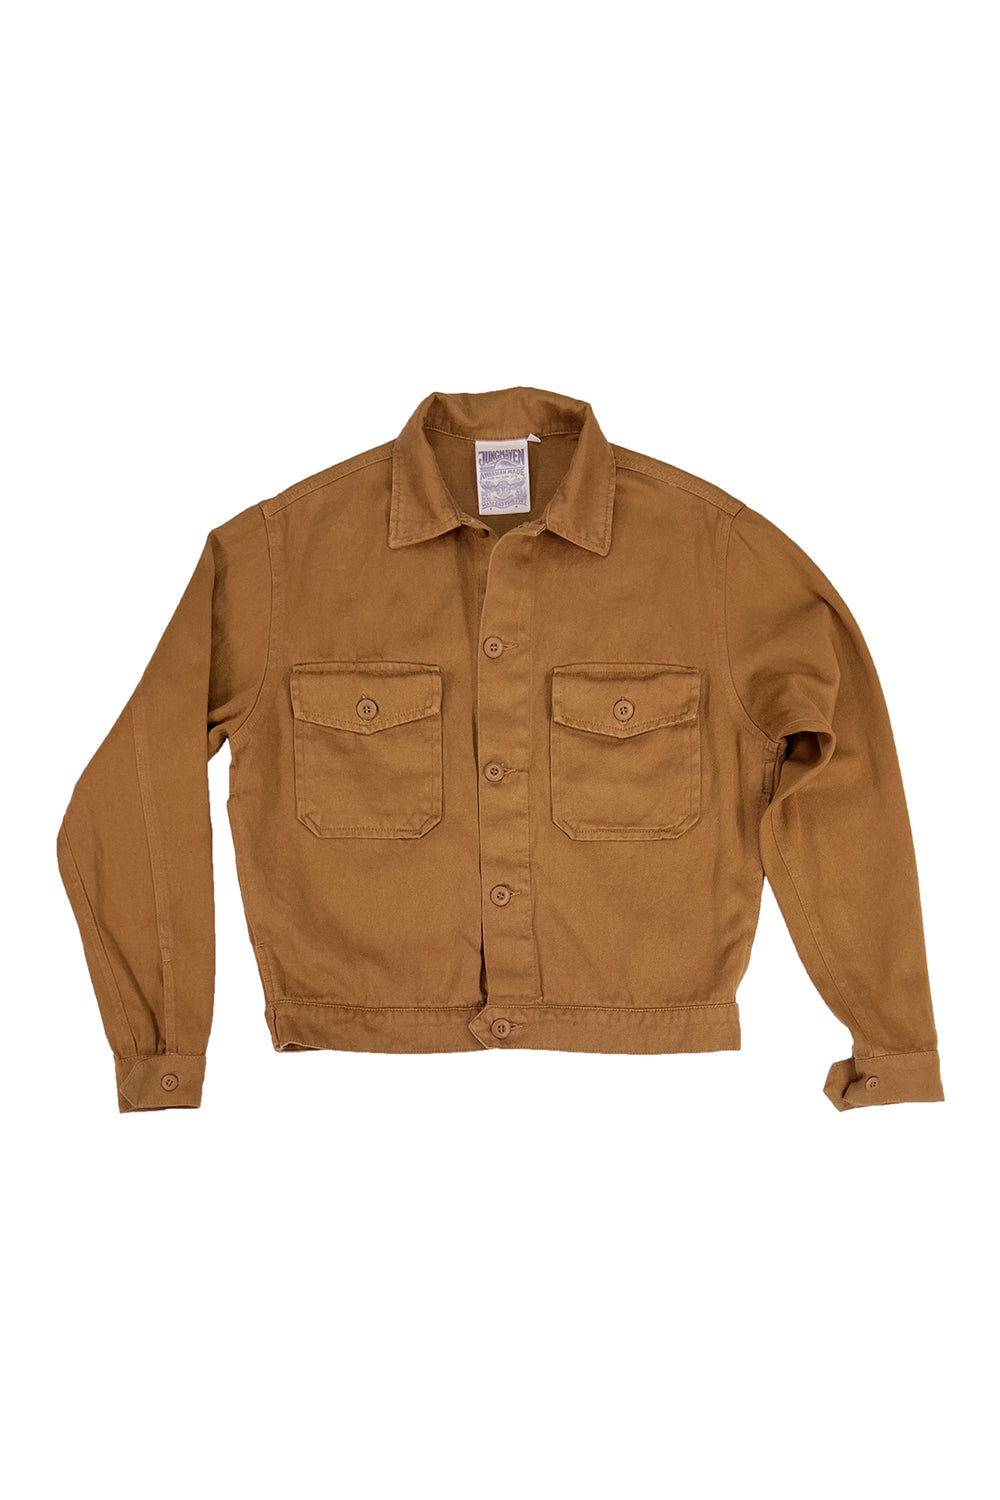 Mechanic Jacket | Jungmaven Hemp Clothing & Accessories / Color: Coyote